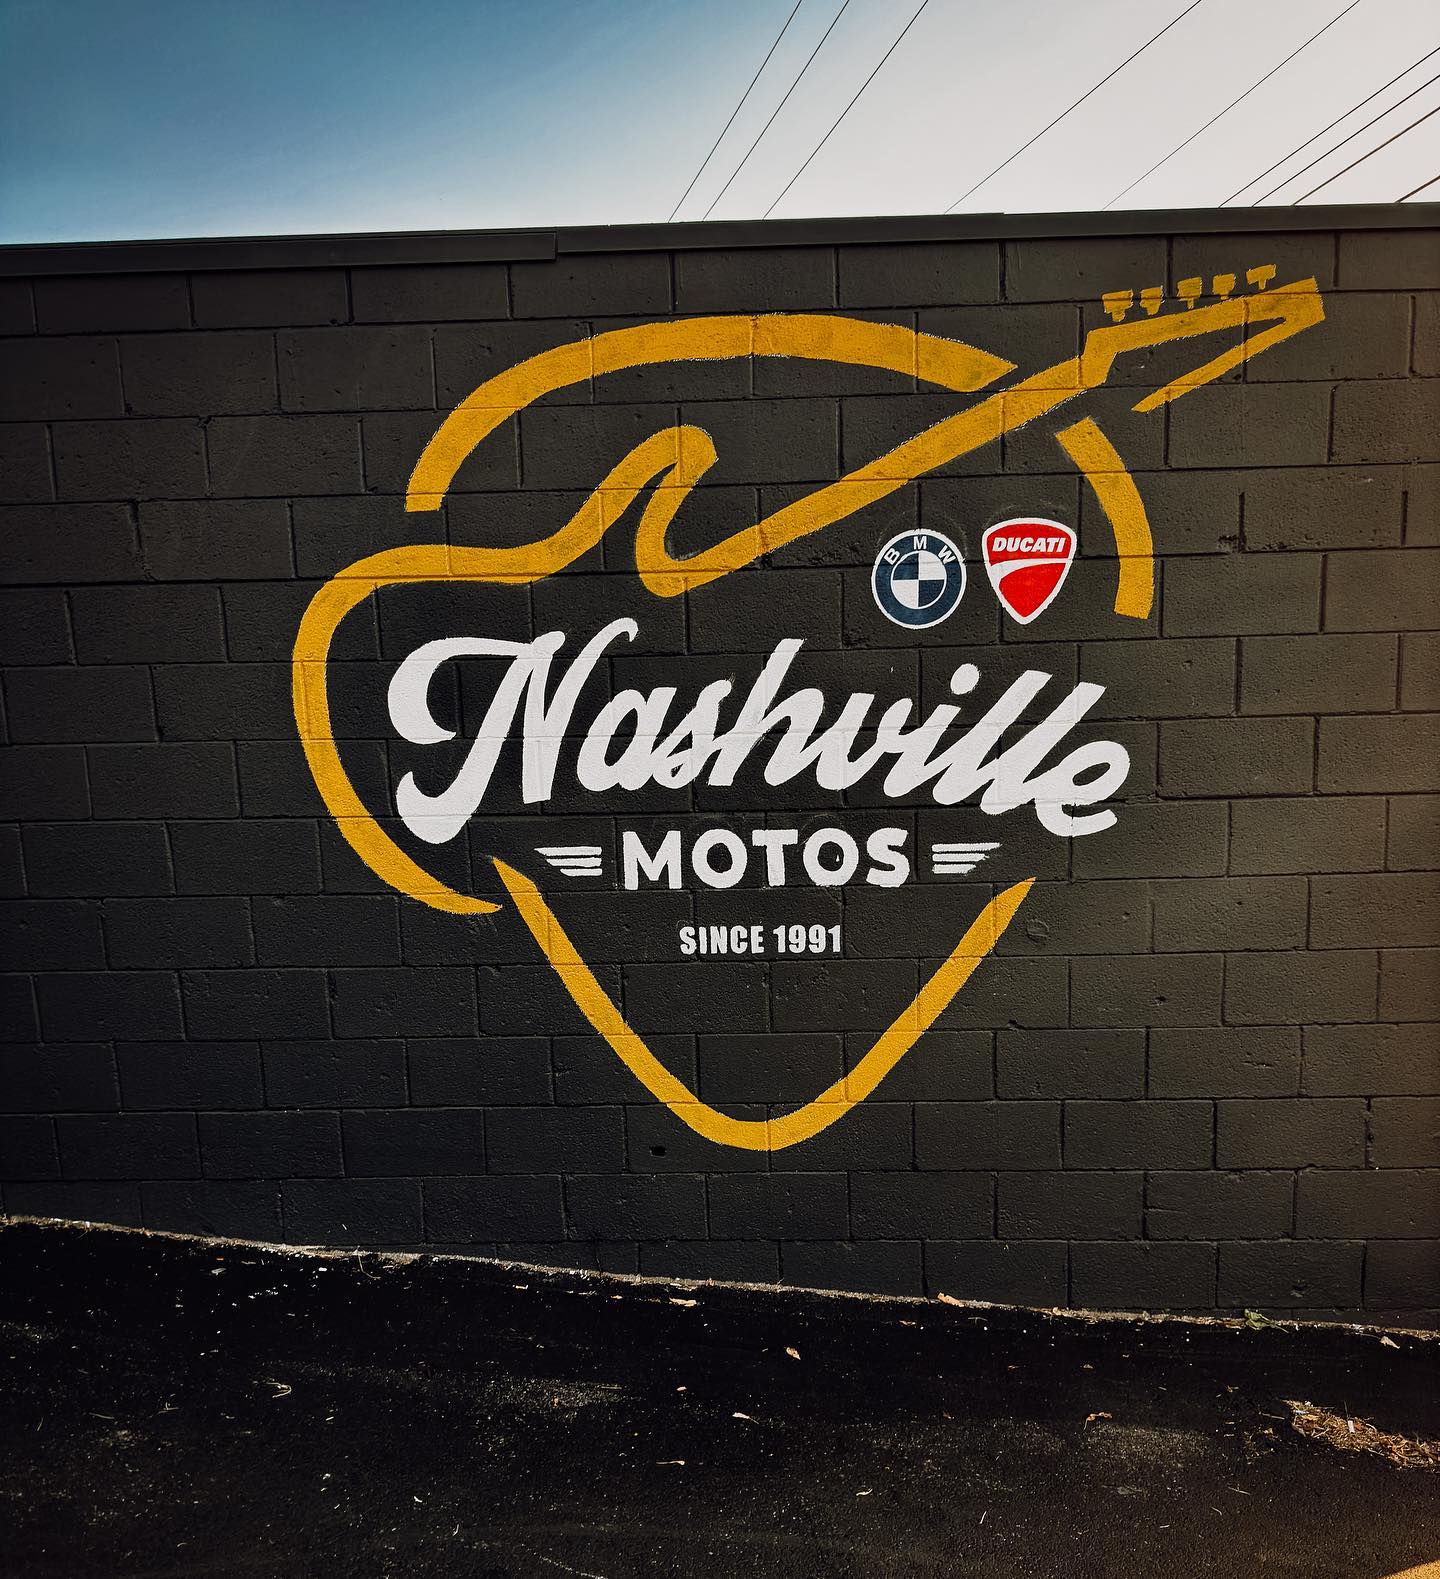 Nashville Motos, Nashville Tennessee. Nashville Motos Wall Mural. Nashville's premier Ducati & BMW motorcycle dealership in Tennessee.